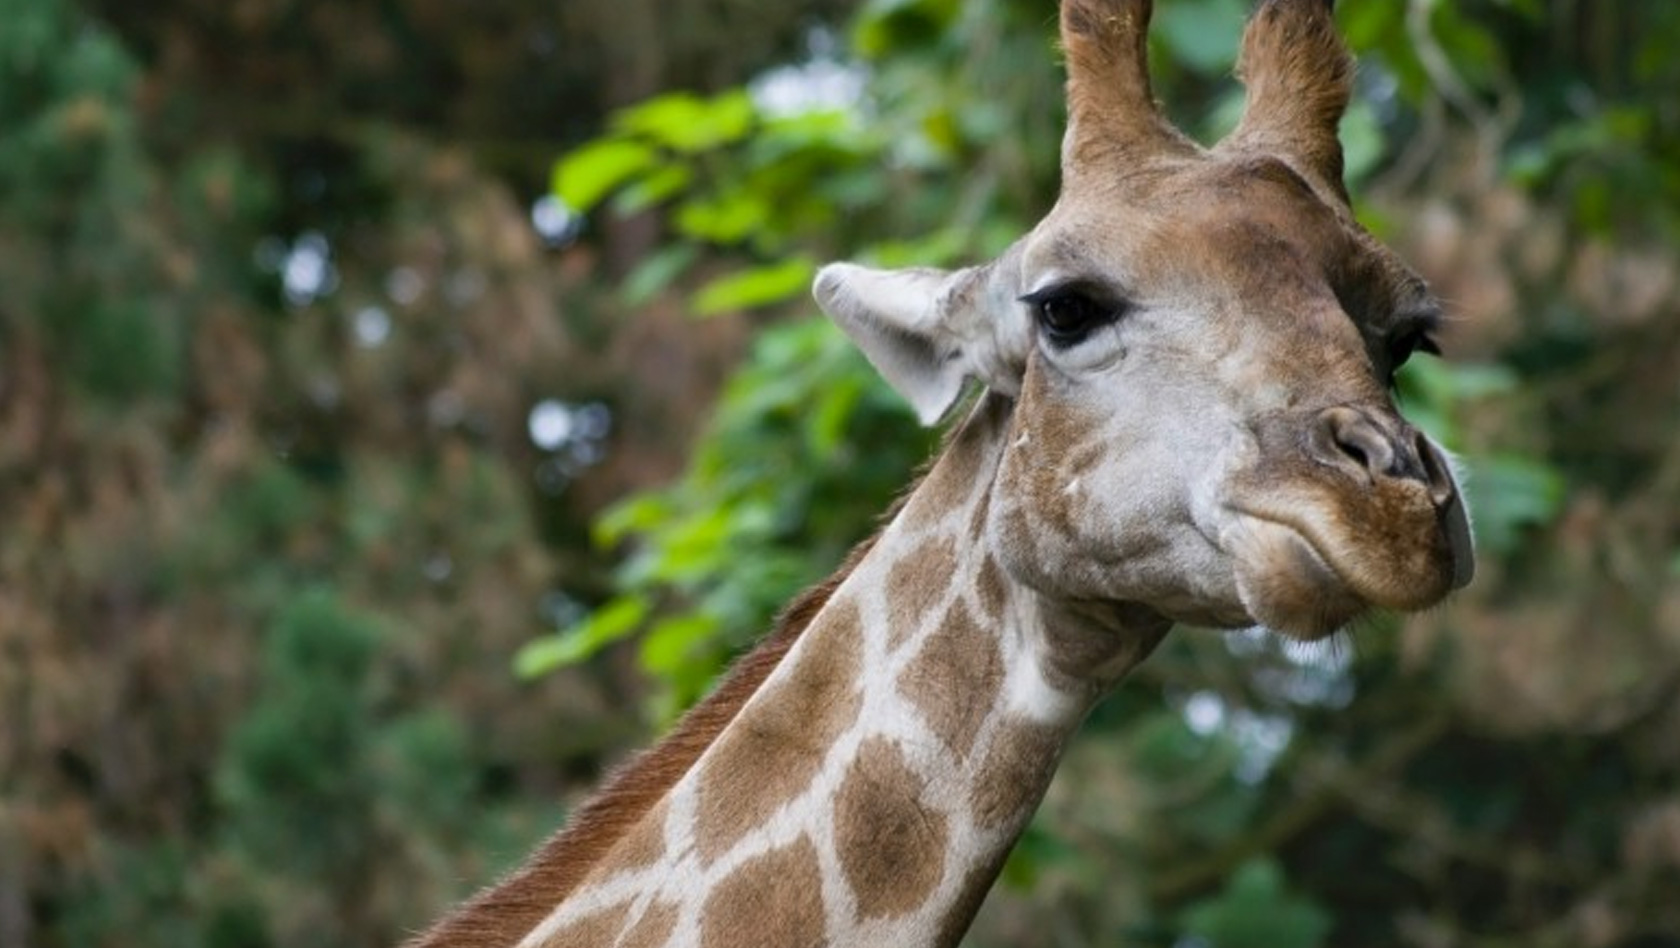 Giraffe im Zoo Dortmund